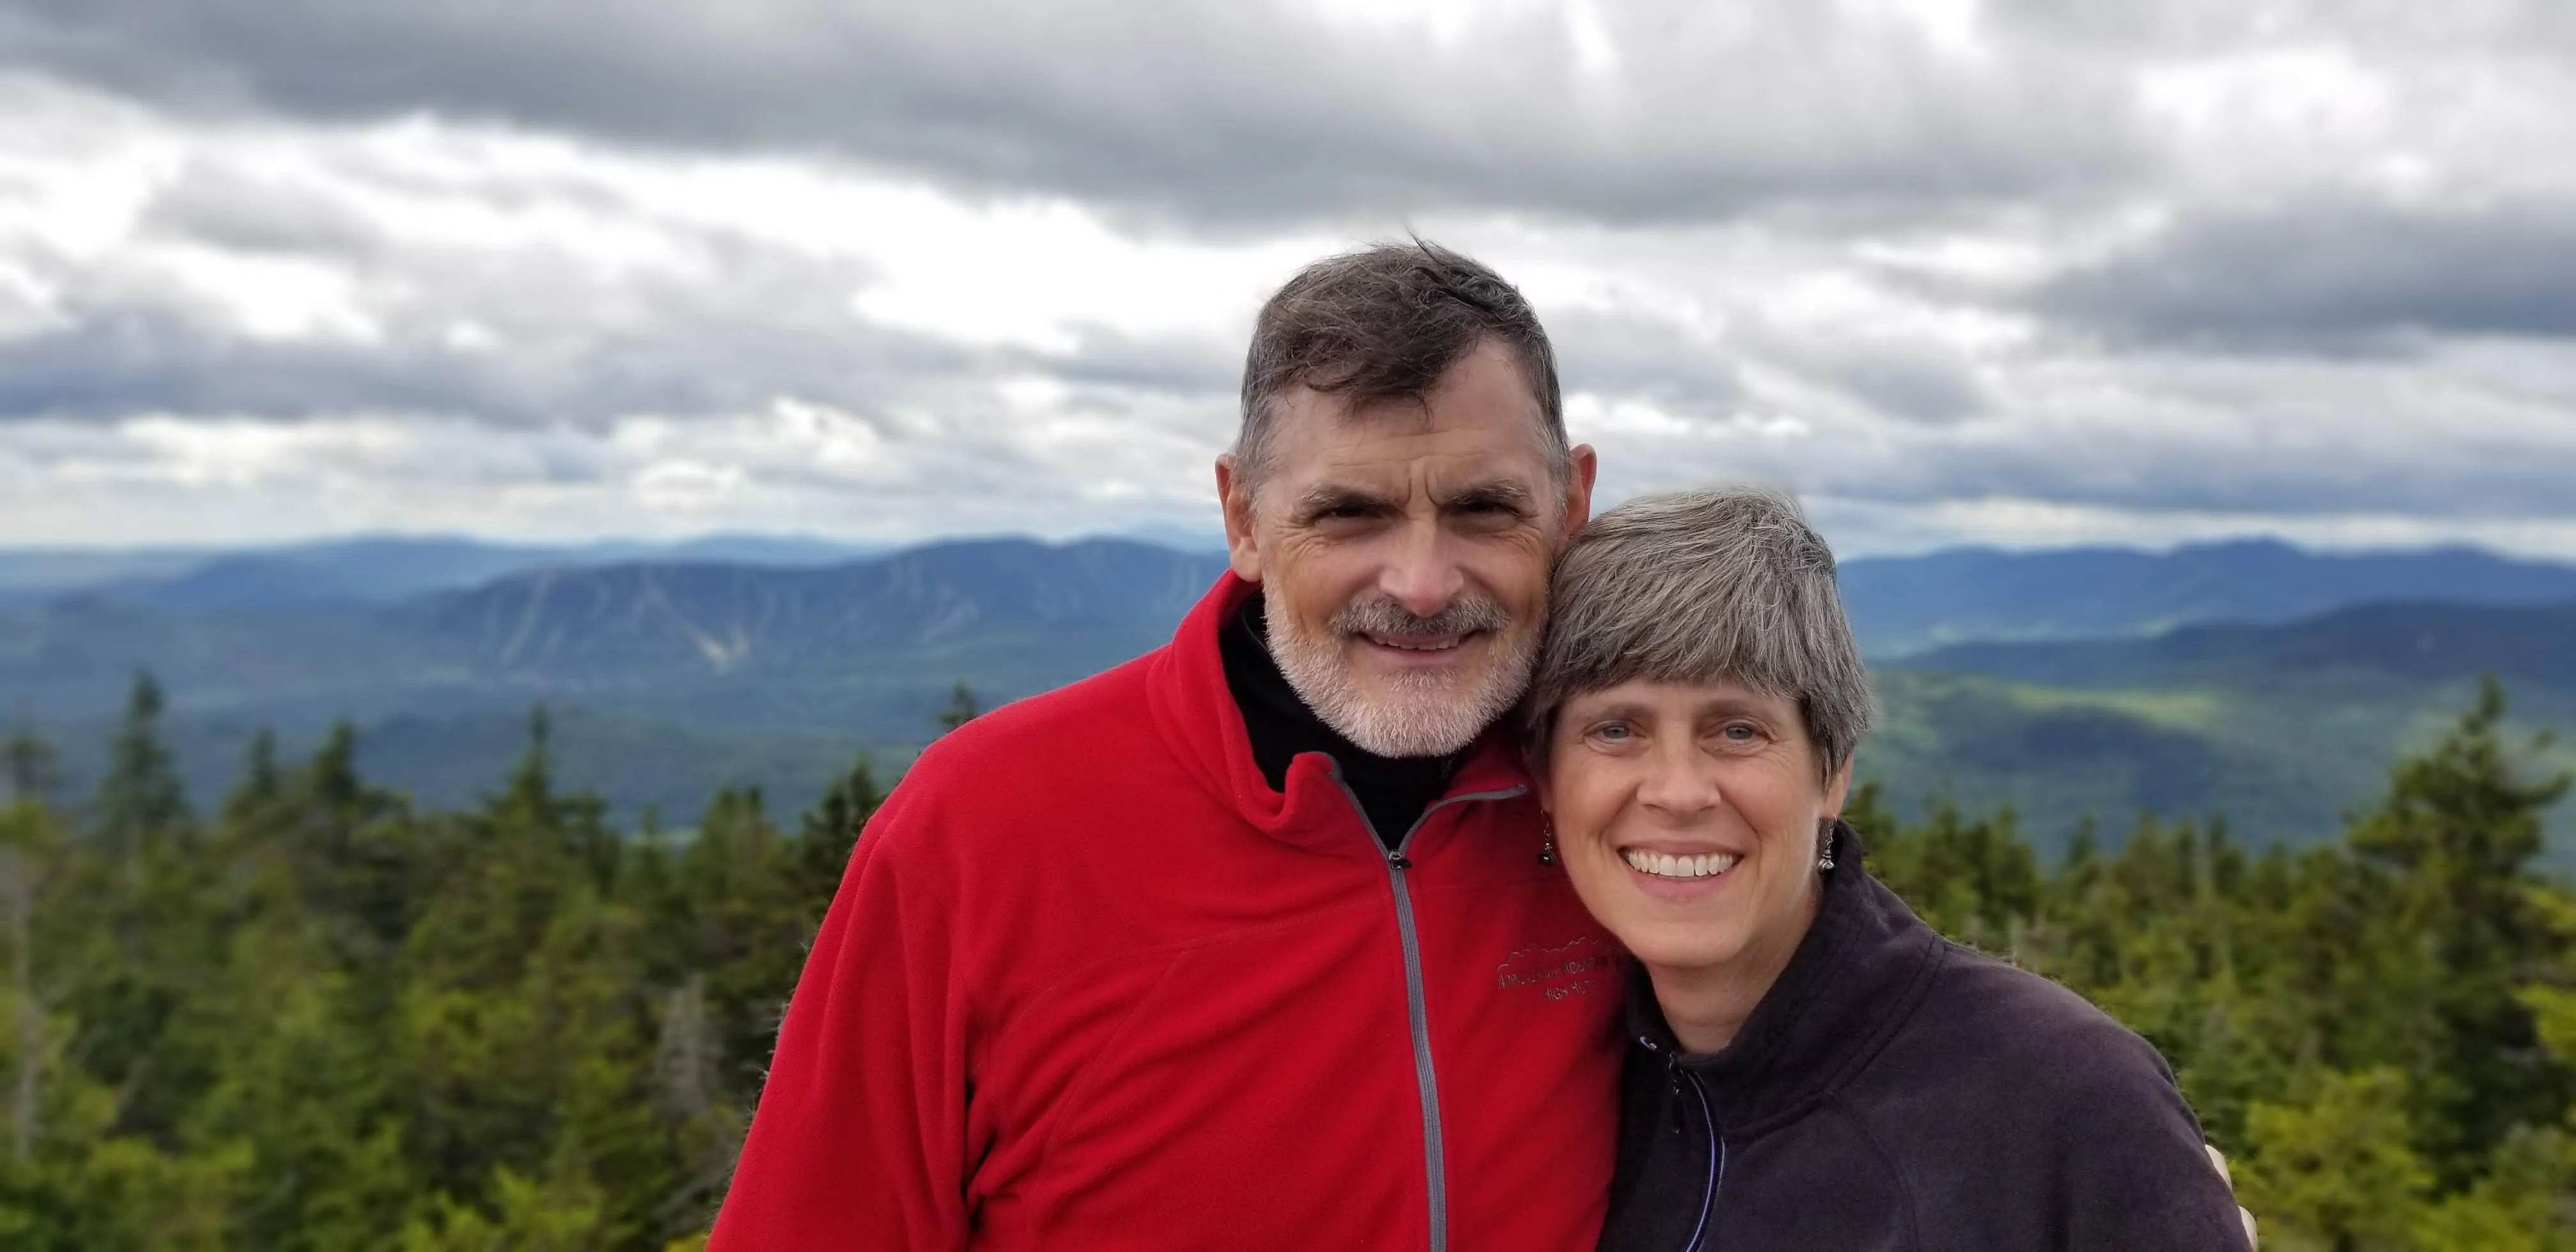 Deborah C. Owen and husband on a mountain